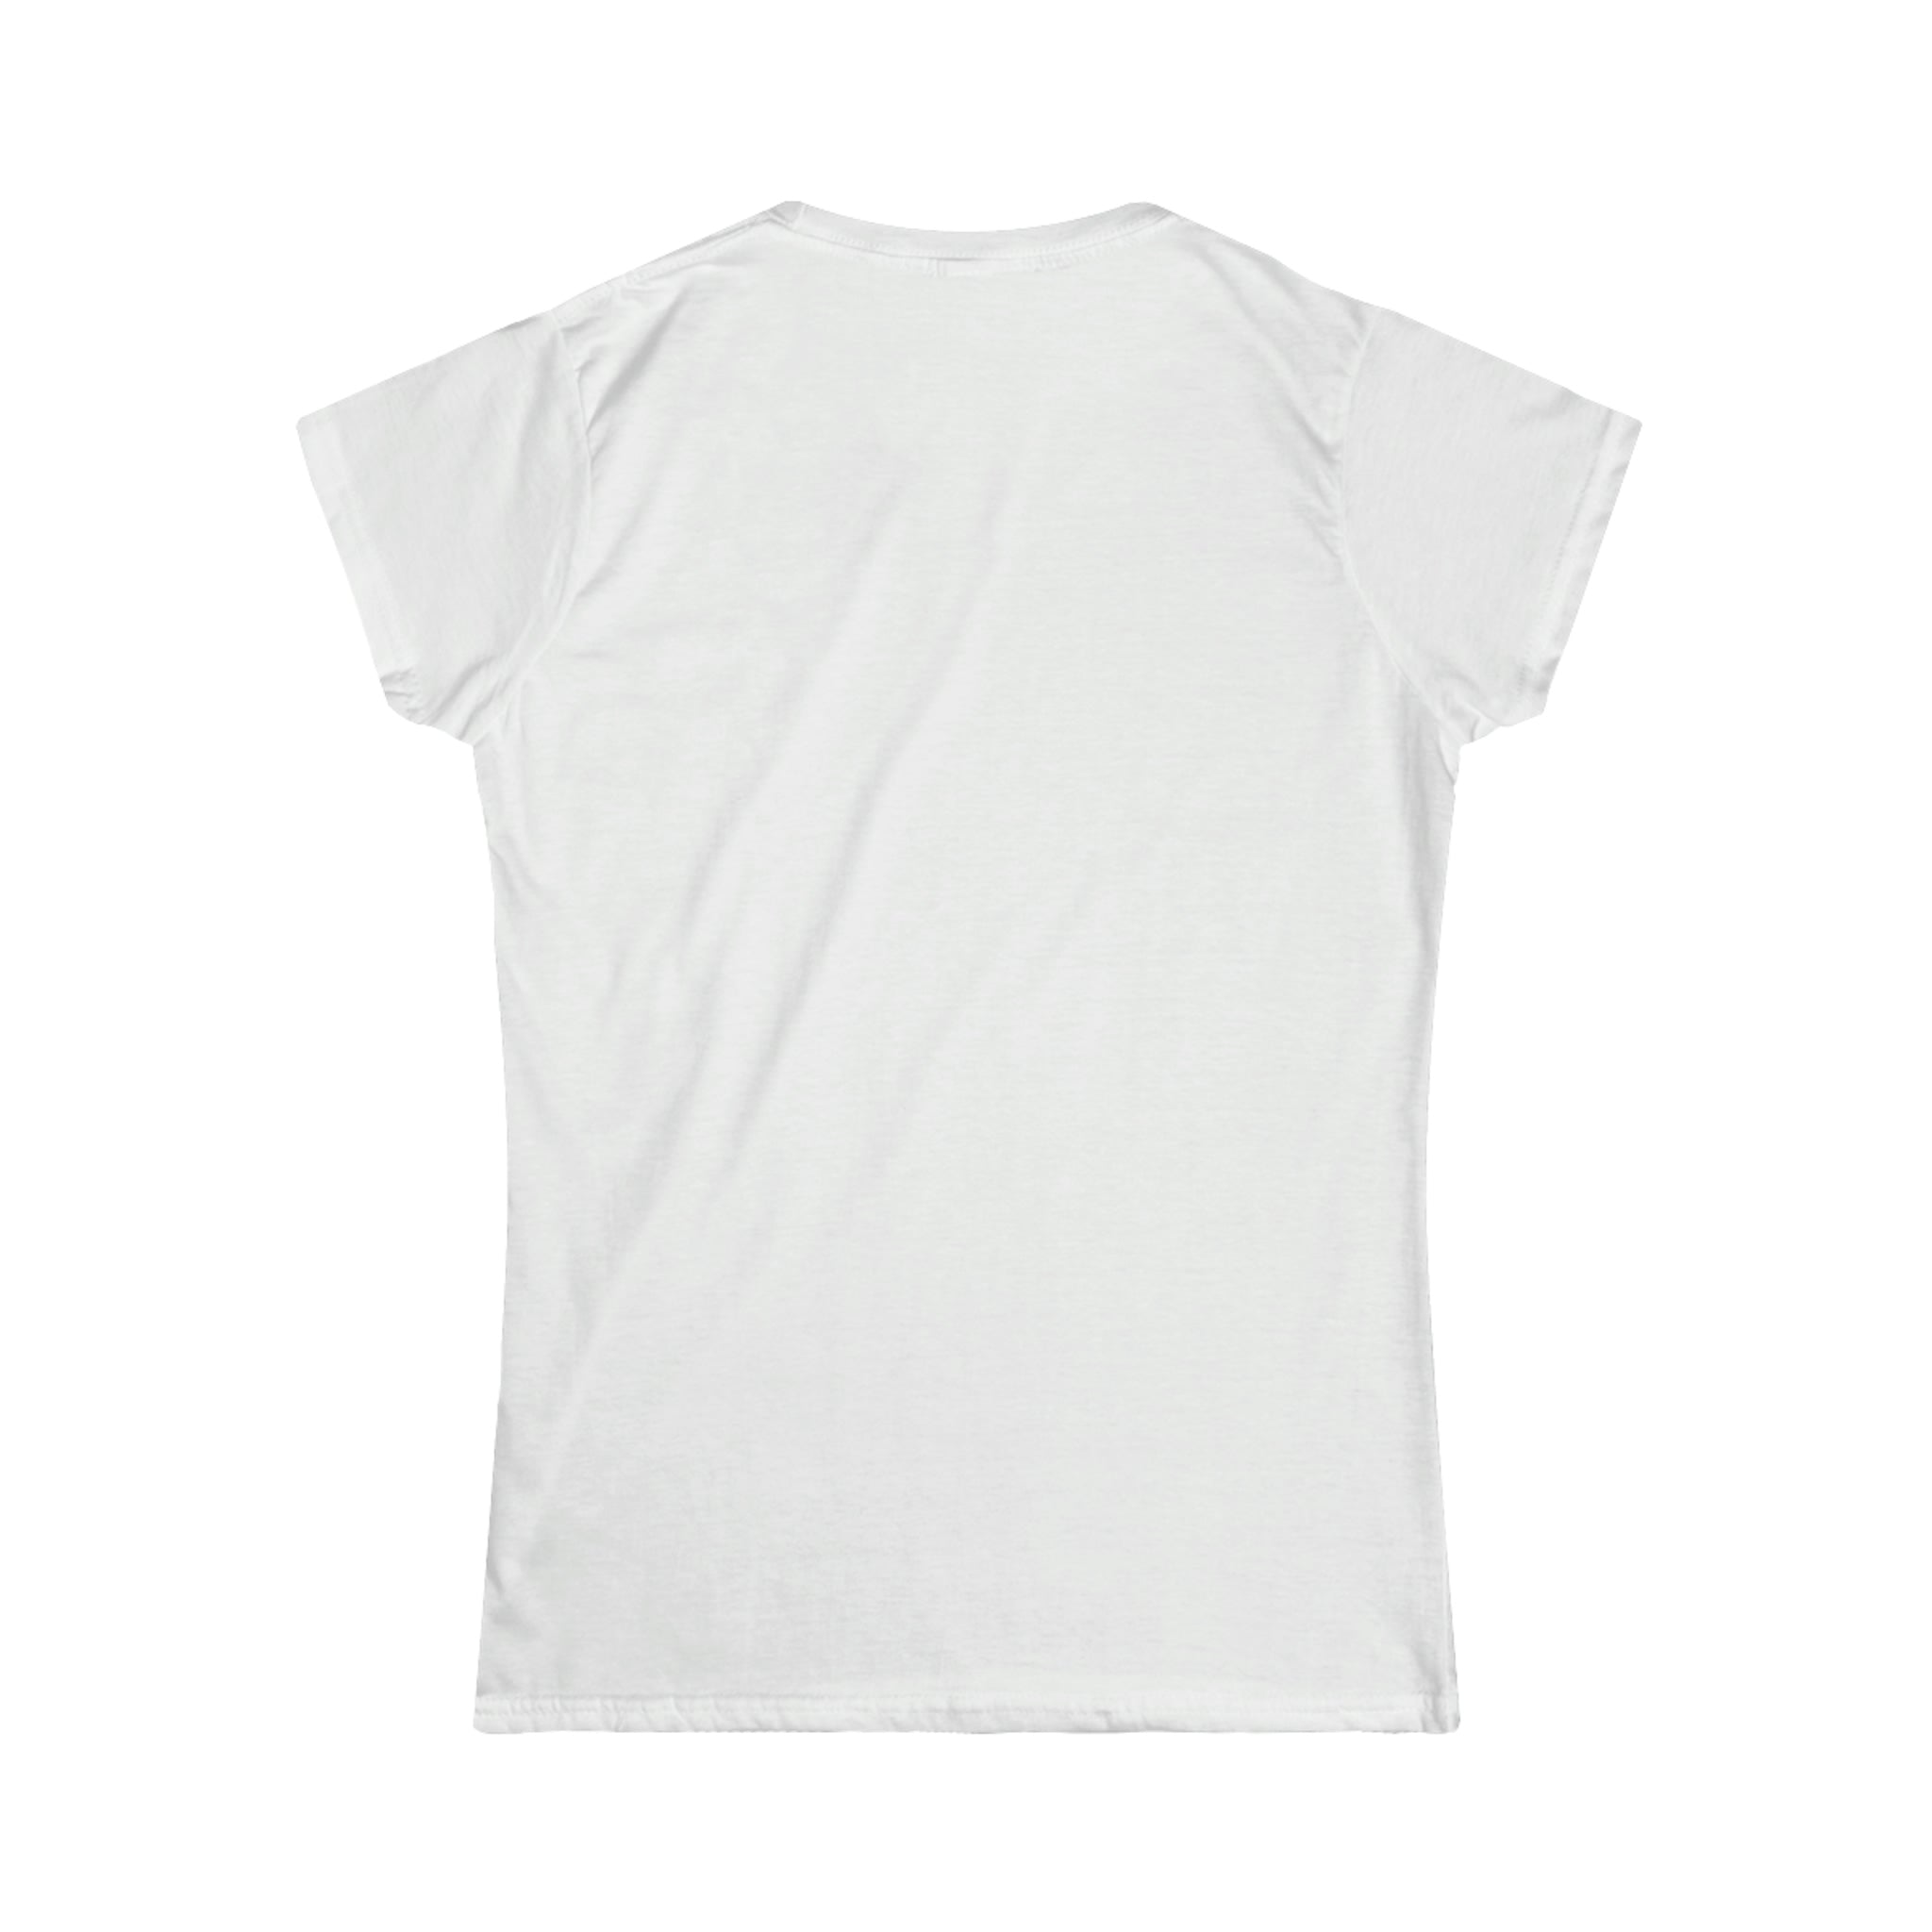 Printify T-Shirt Sly Fox Women's Softstyle Tee - S-2XL